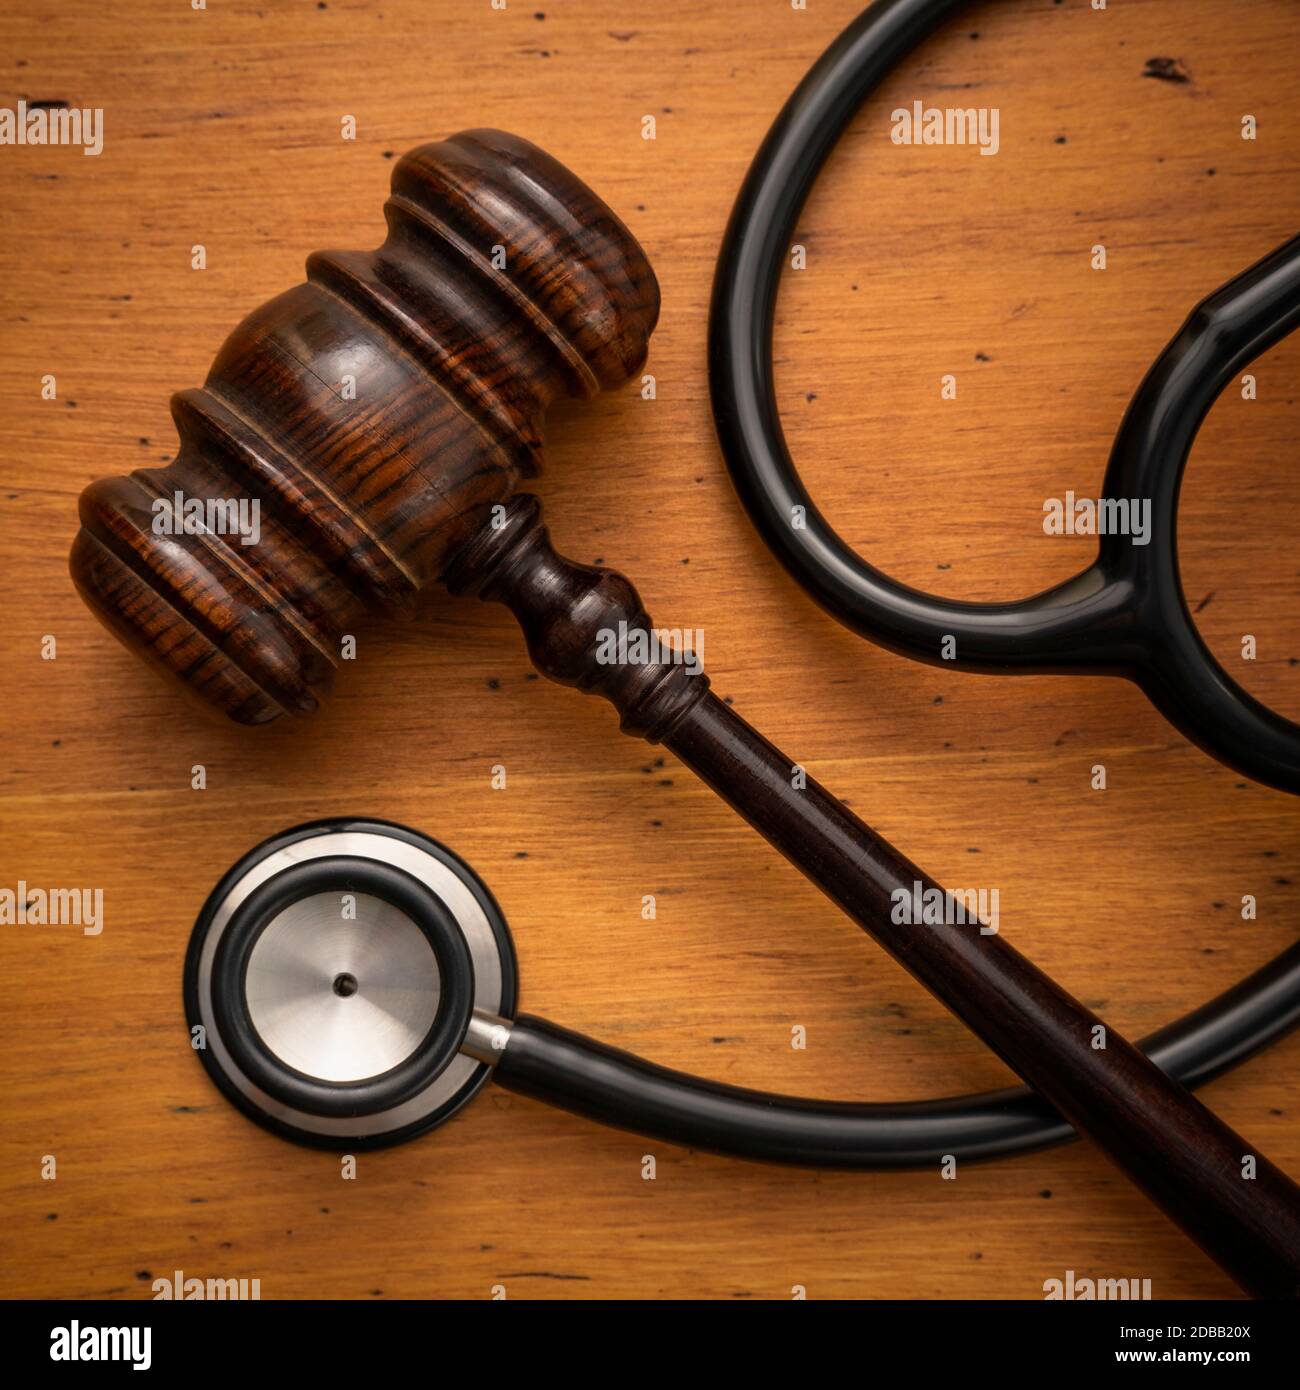 Gavel and stethoscope on wooden background Stock Photo